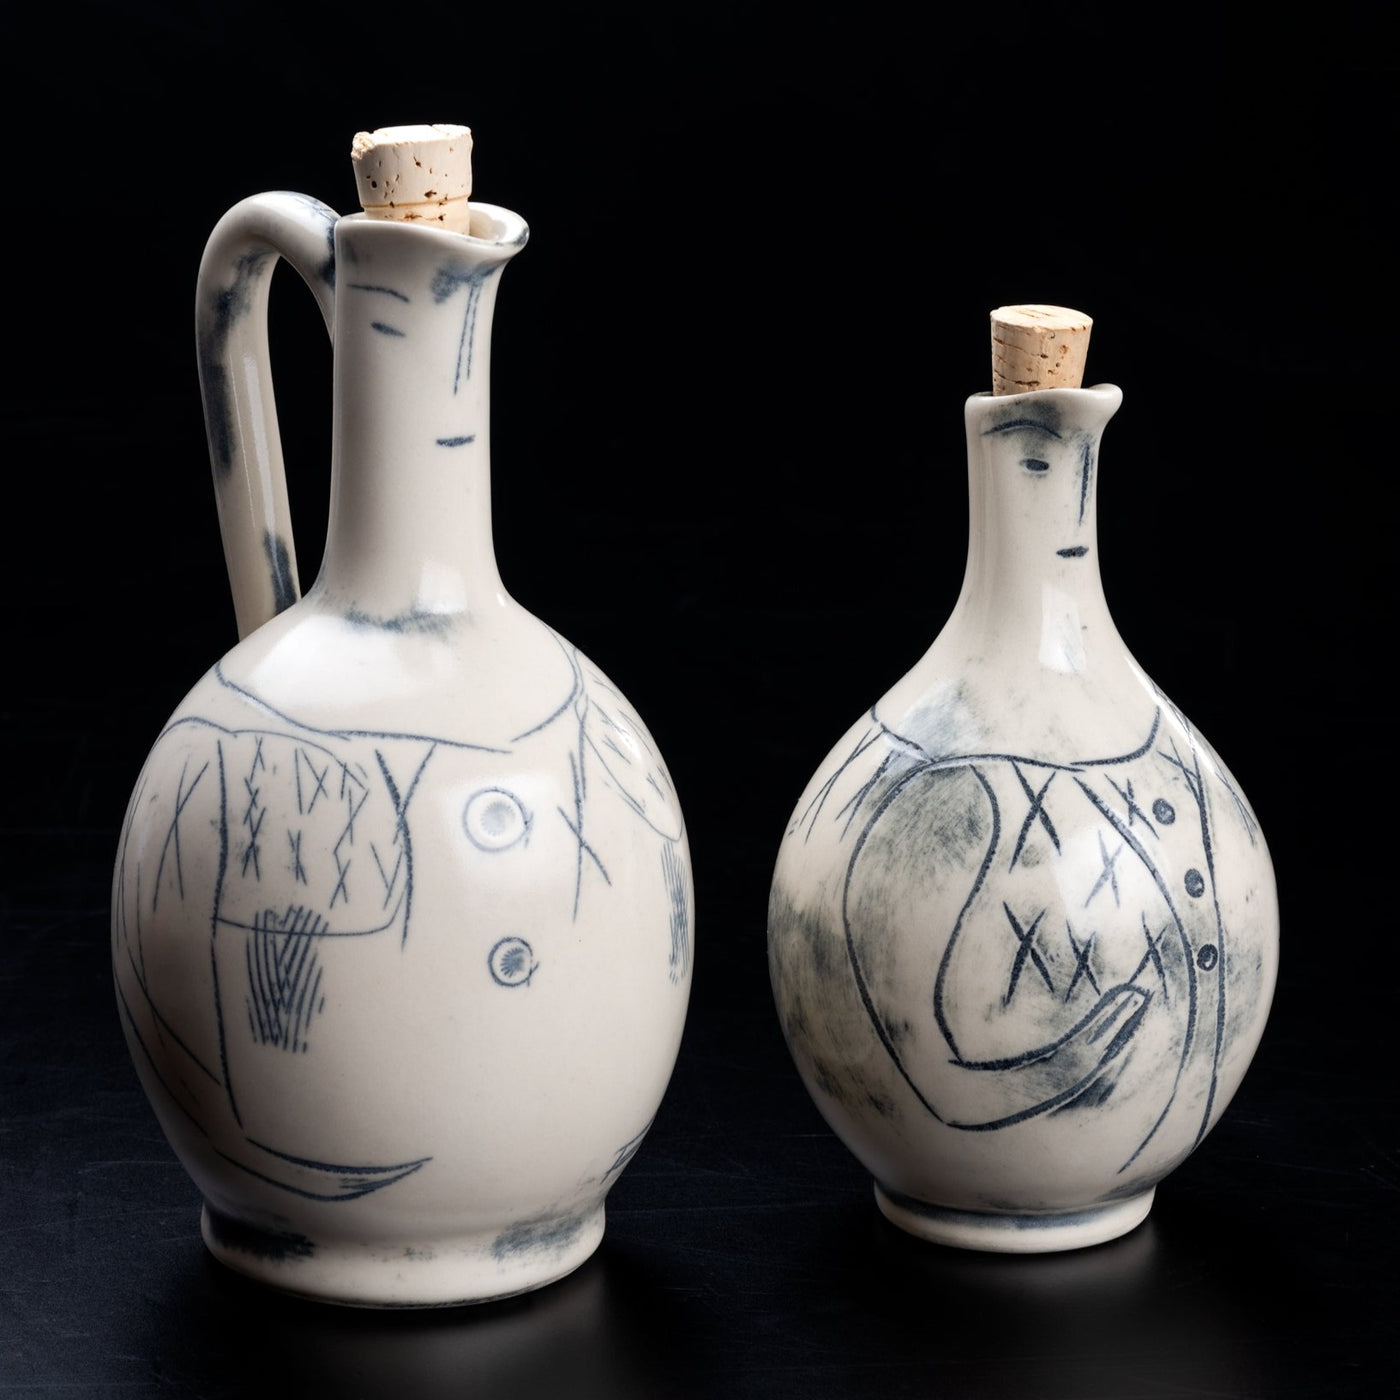 Oil and Vinegar Amphora Set